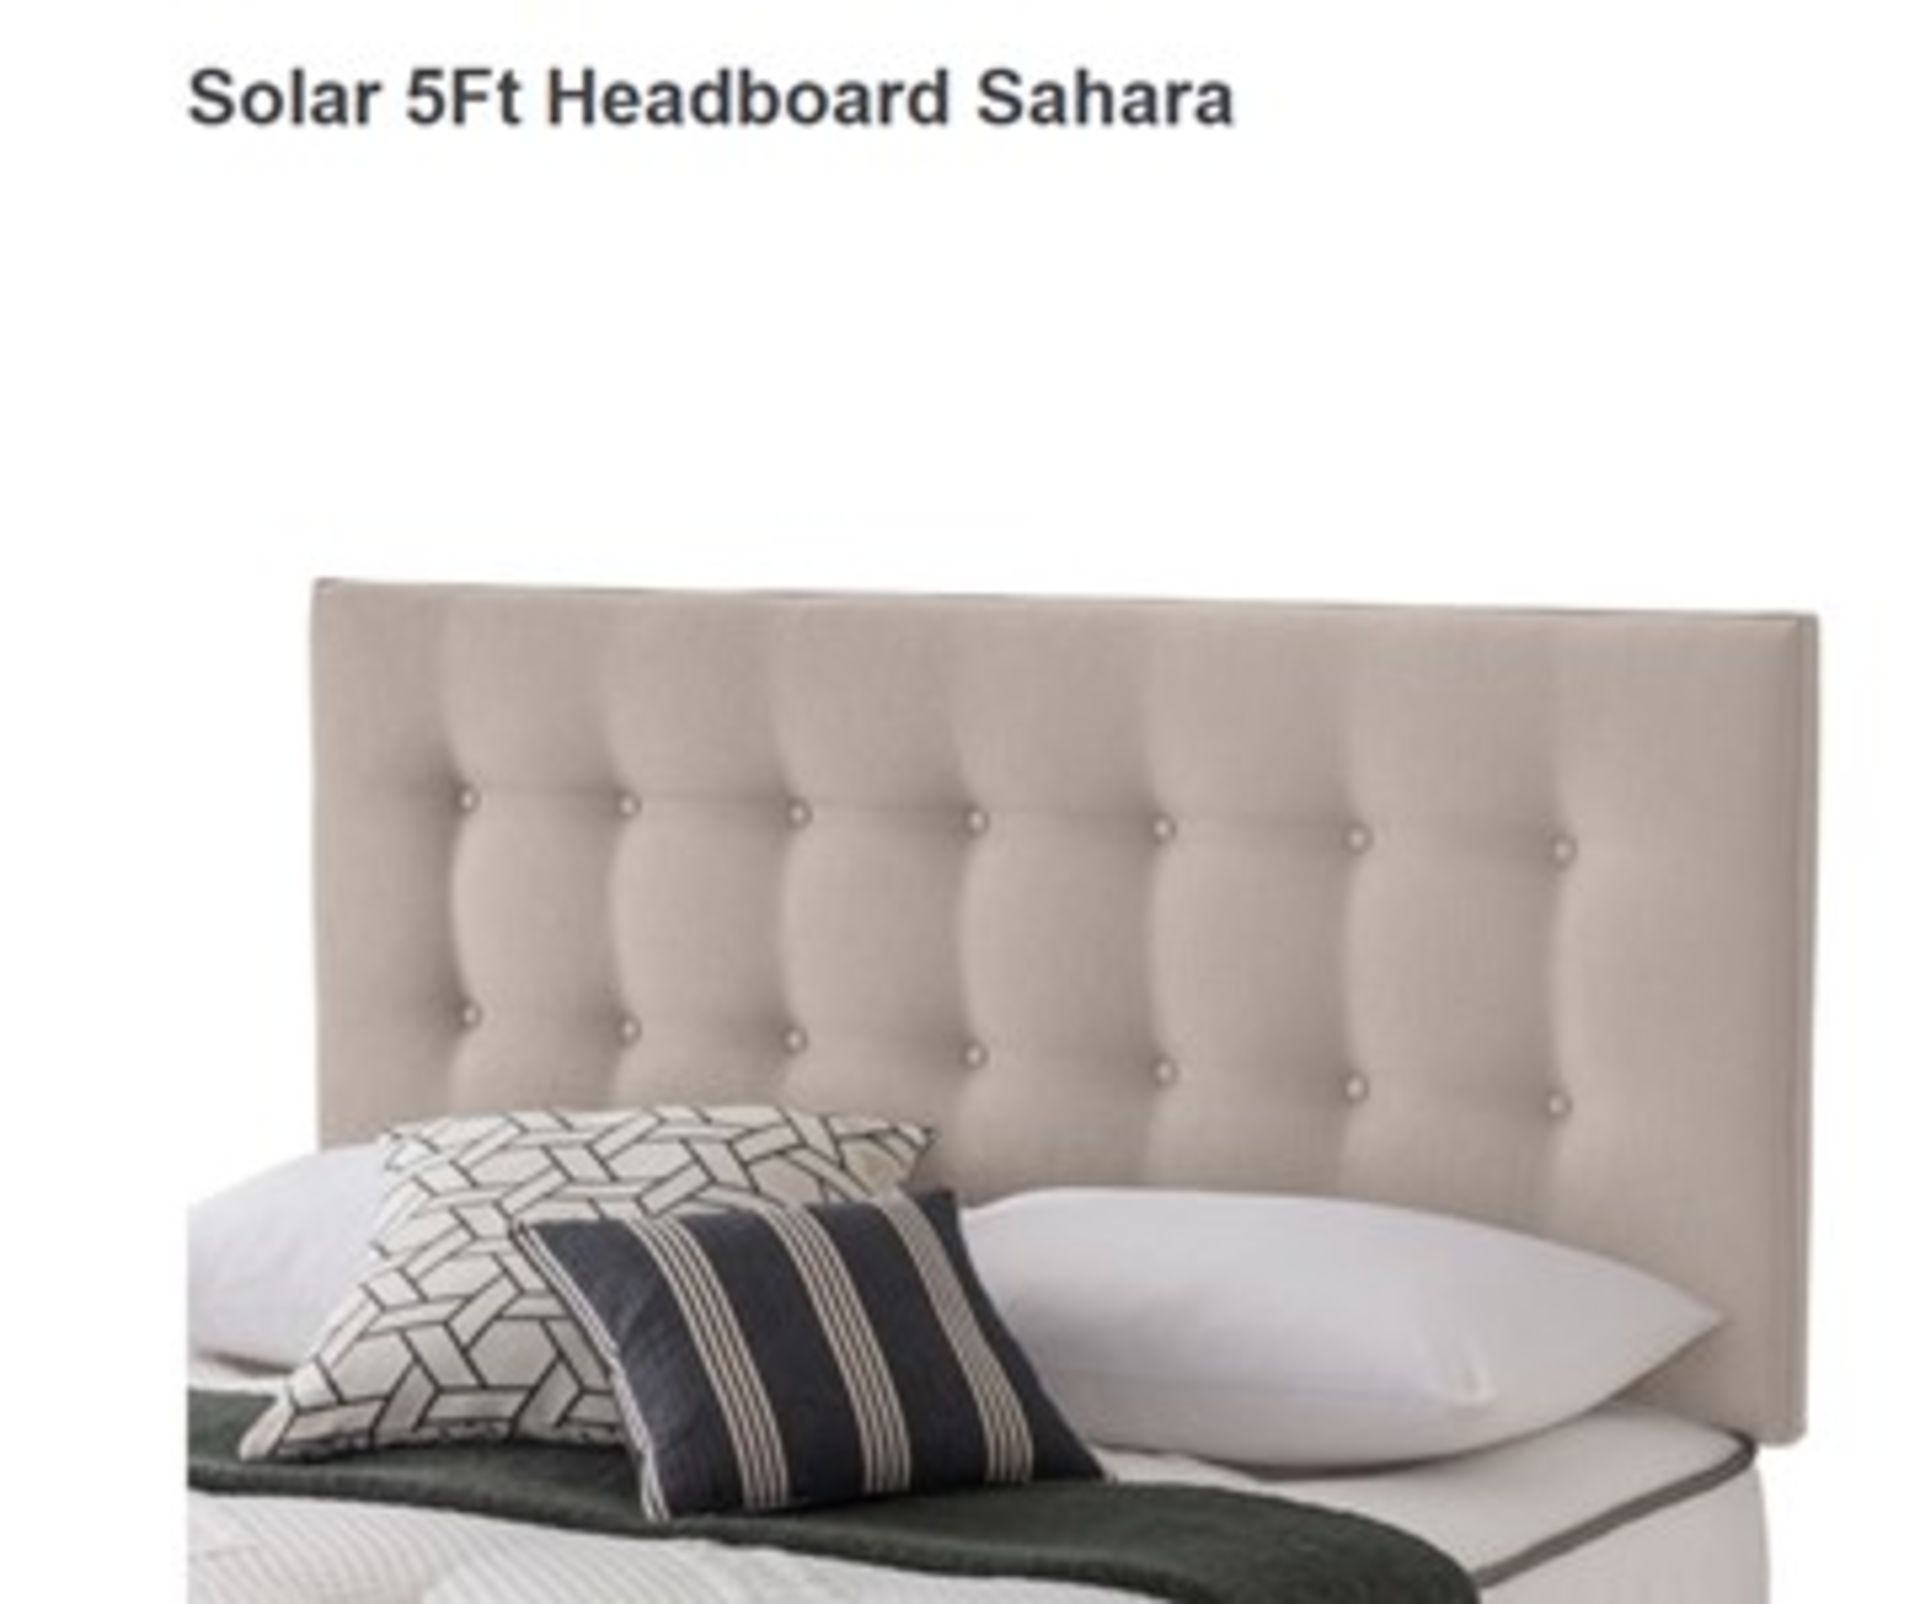 x1| Carpet Right Ex-Display 5ft Silentnight Solar Headboard Sahara|RRP £229|